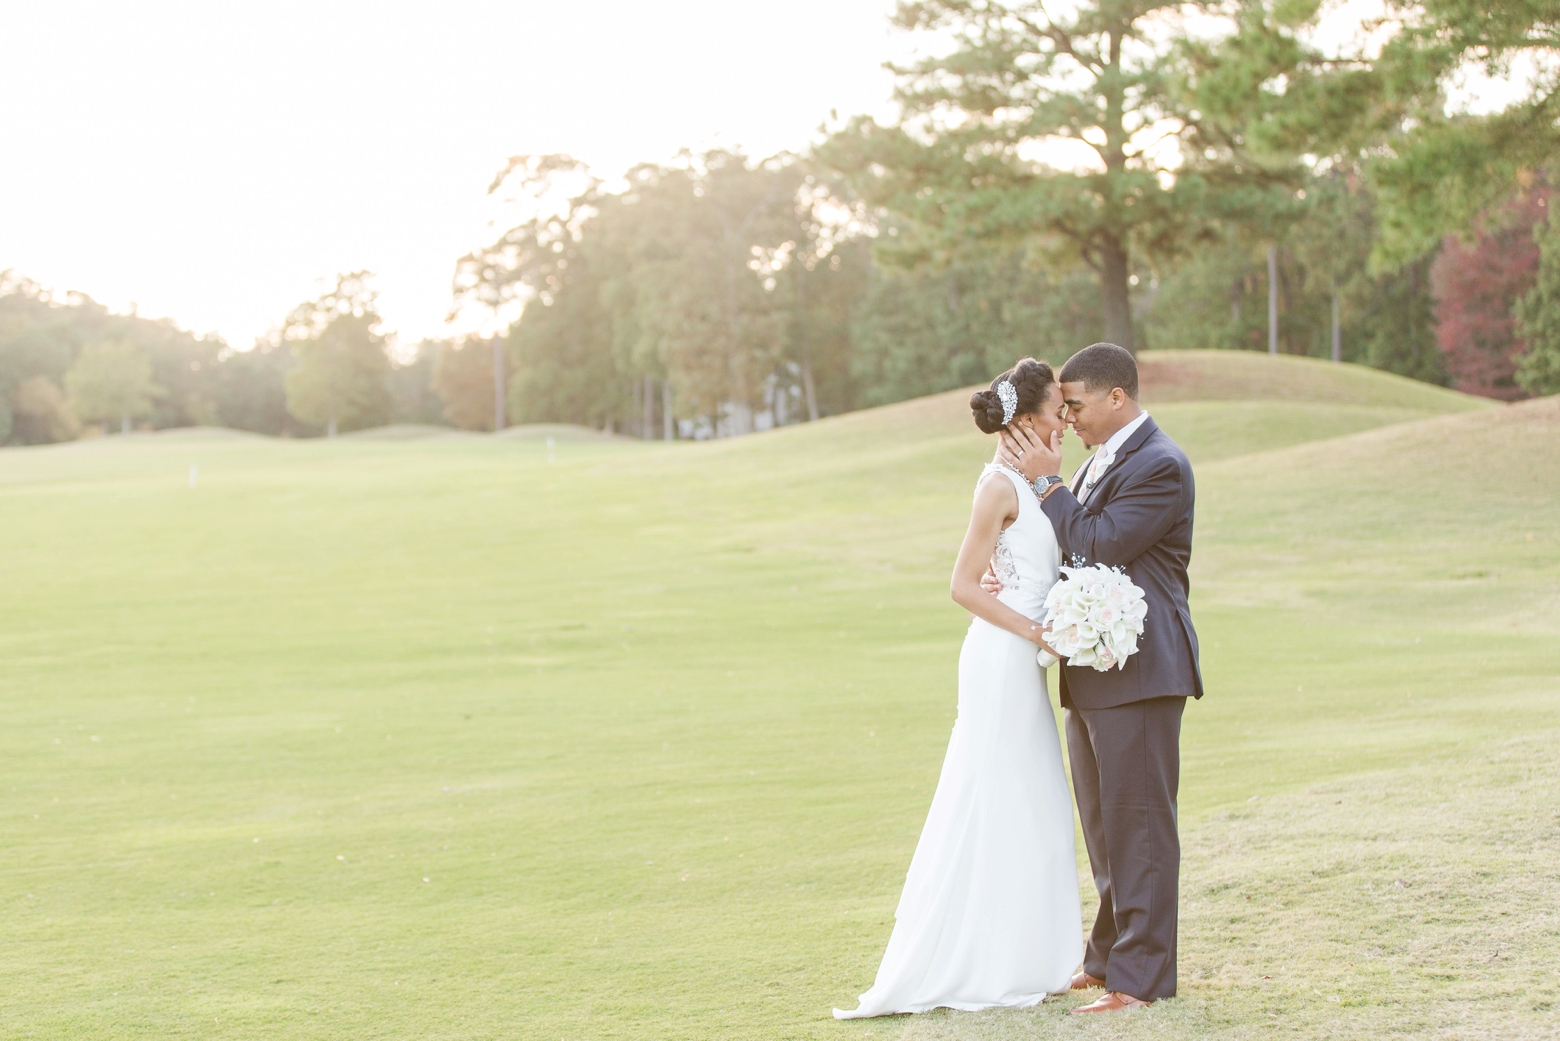 Kiln Creek Golf Club and Resort Wedding by Angie McPherson Photography